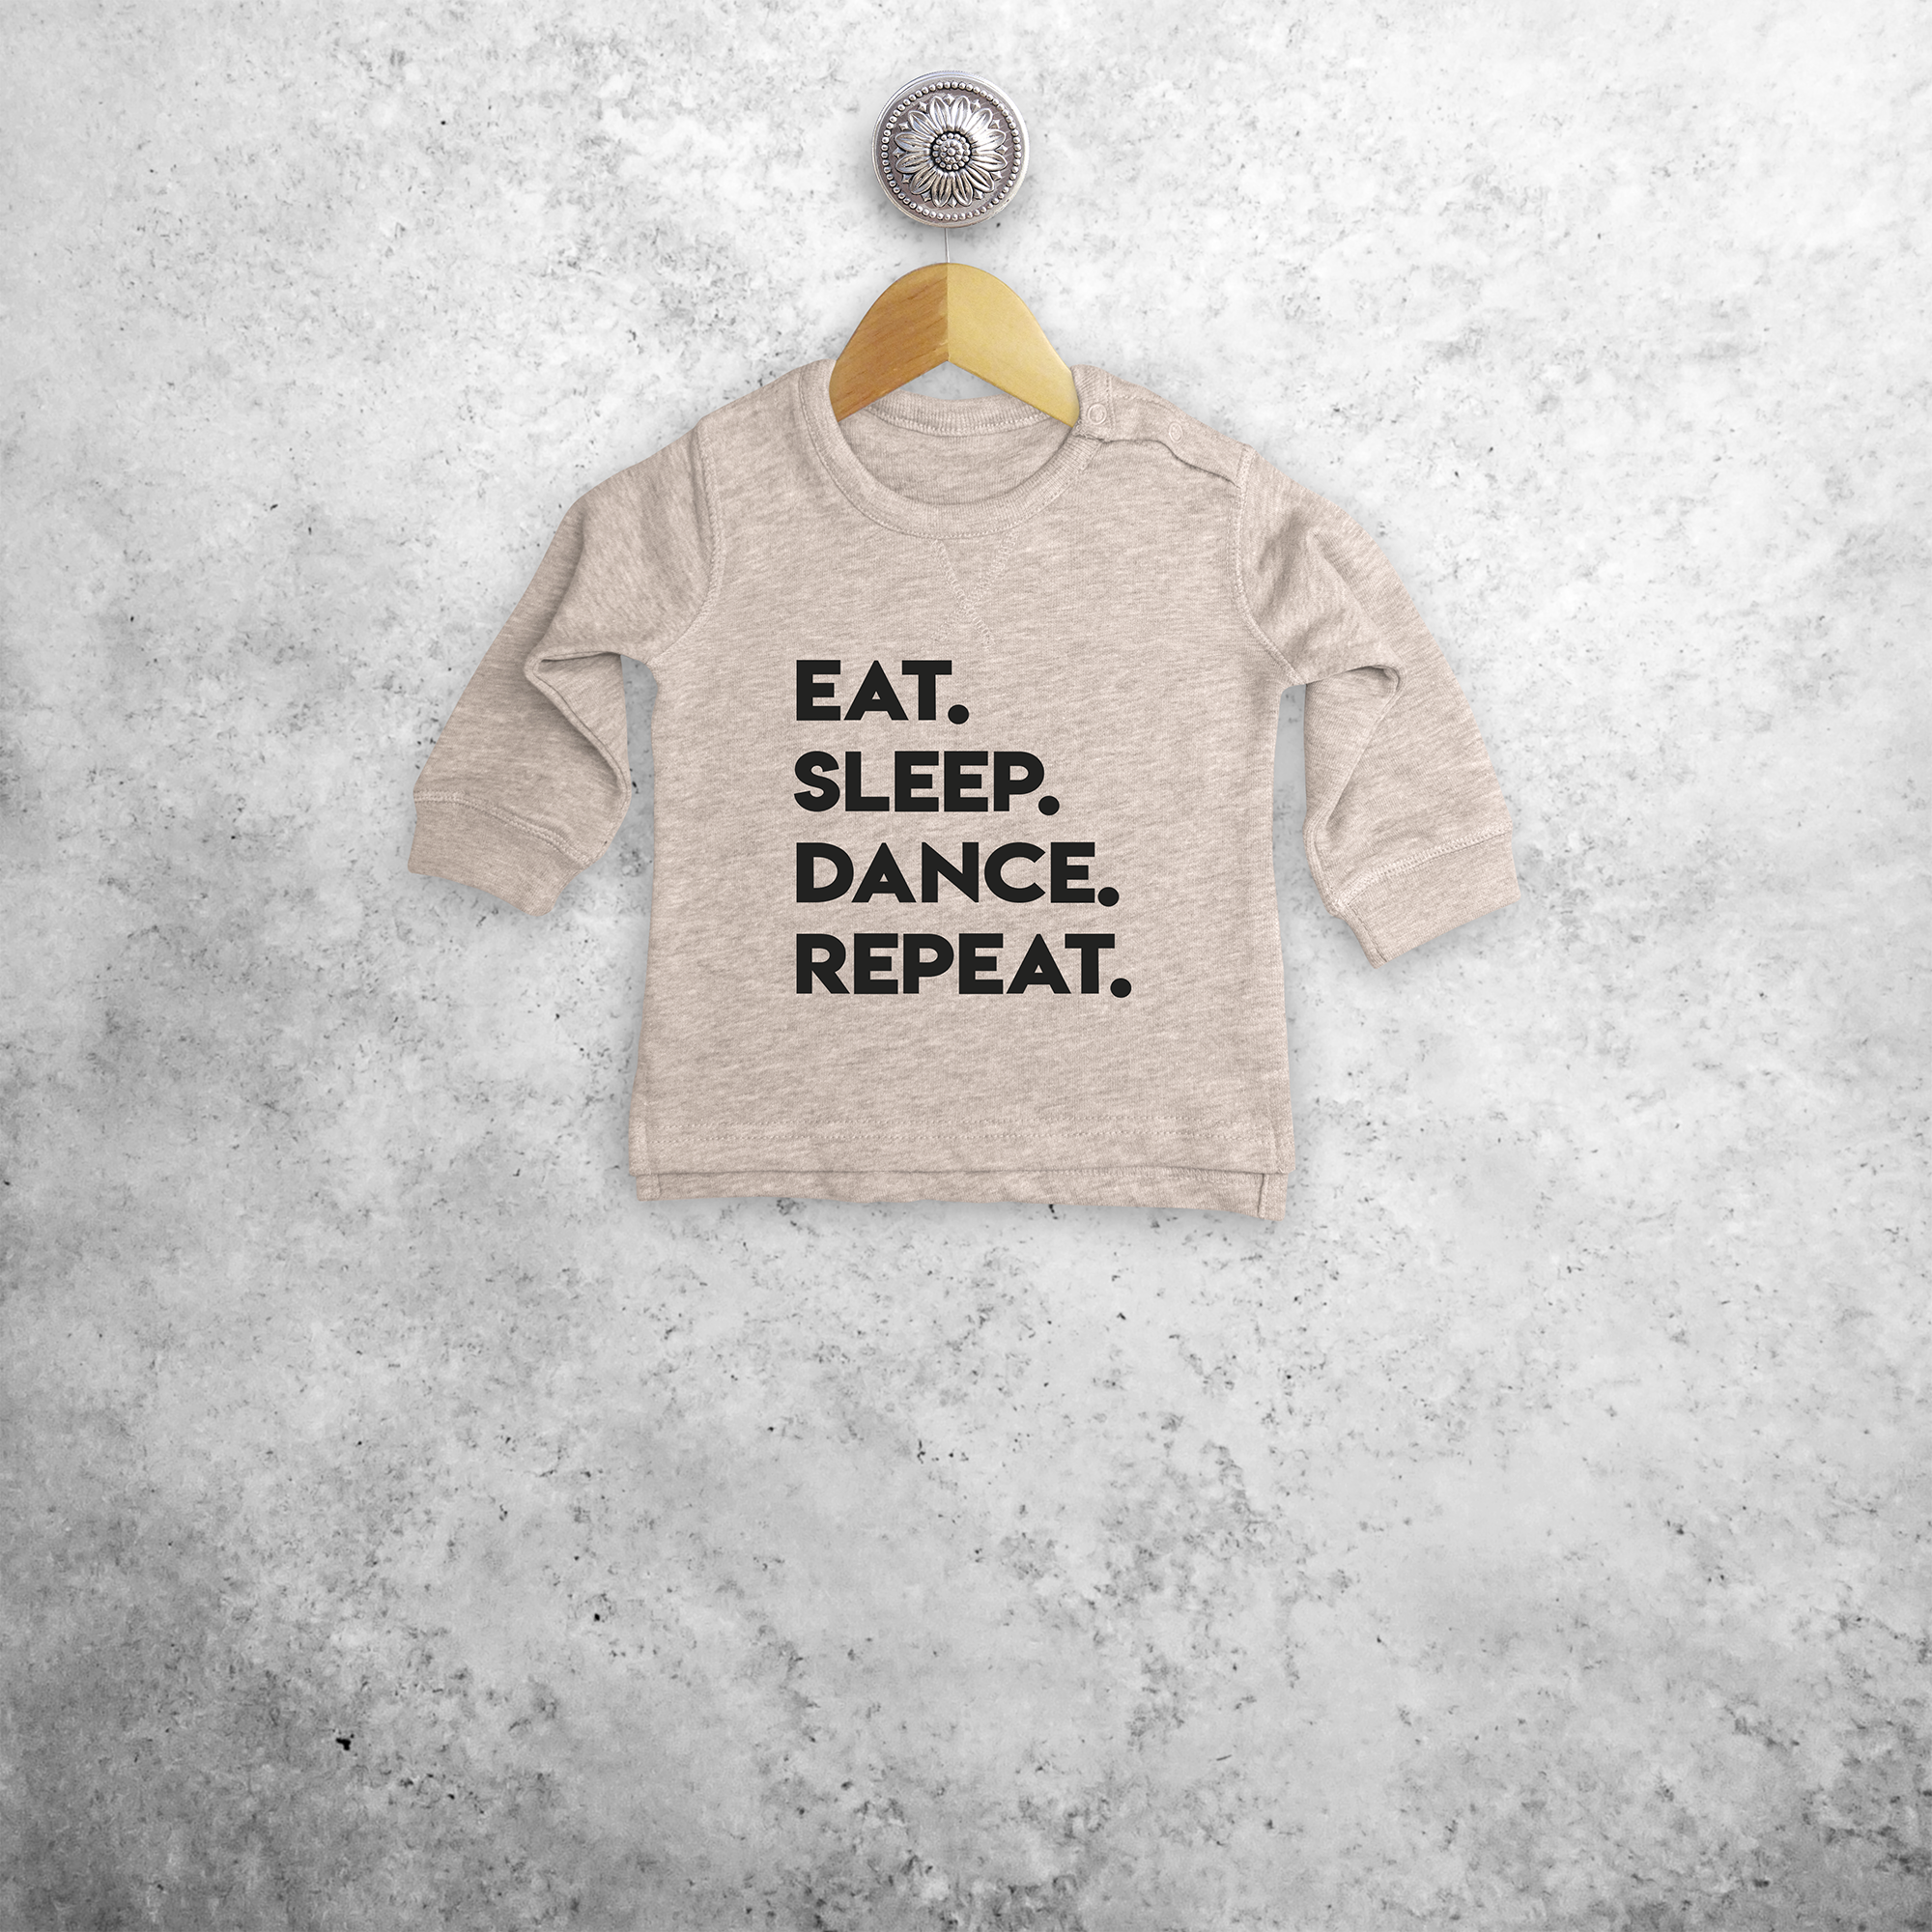 'Eat. Sleep. Dance. Repeat.' baby sweater